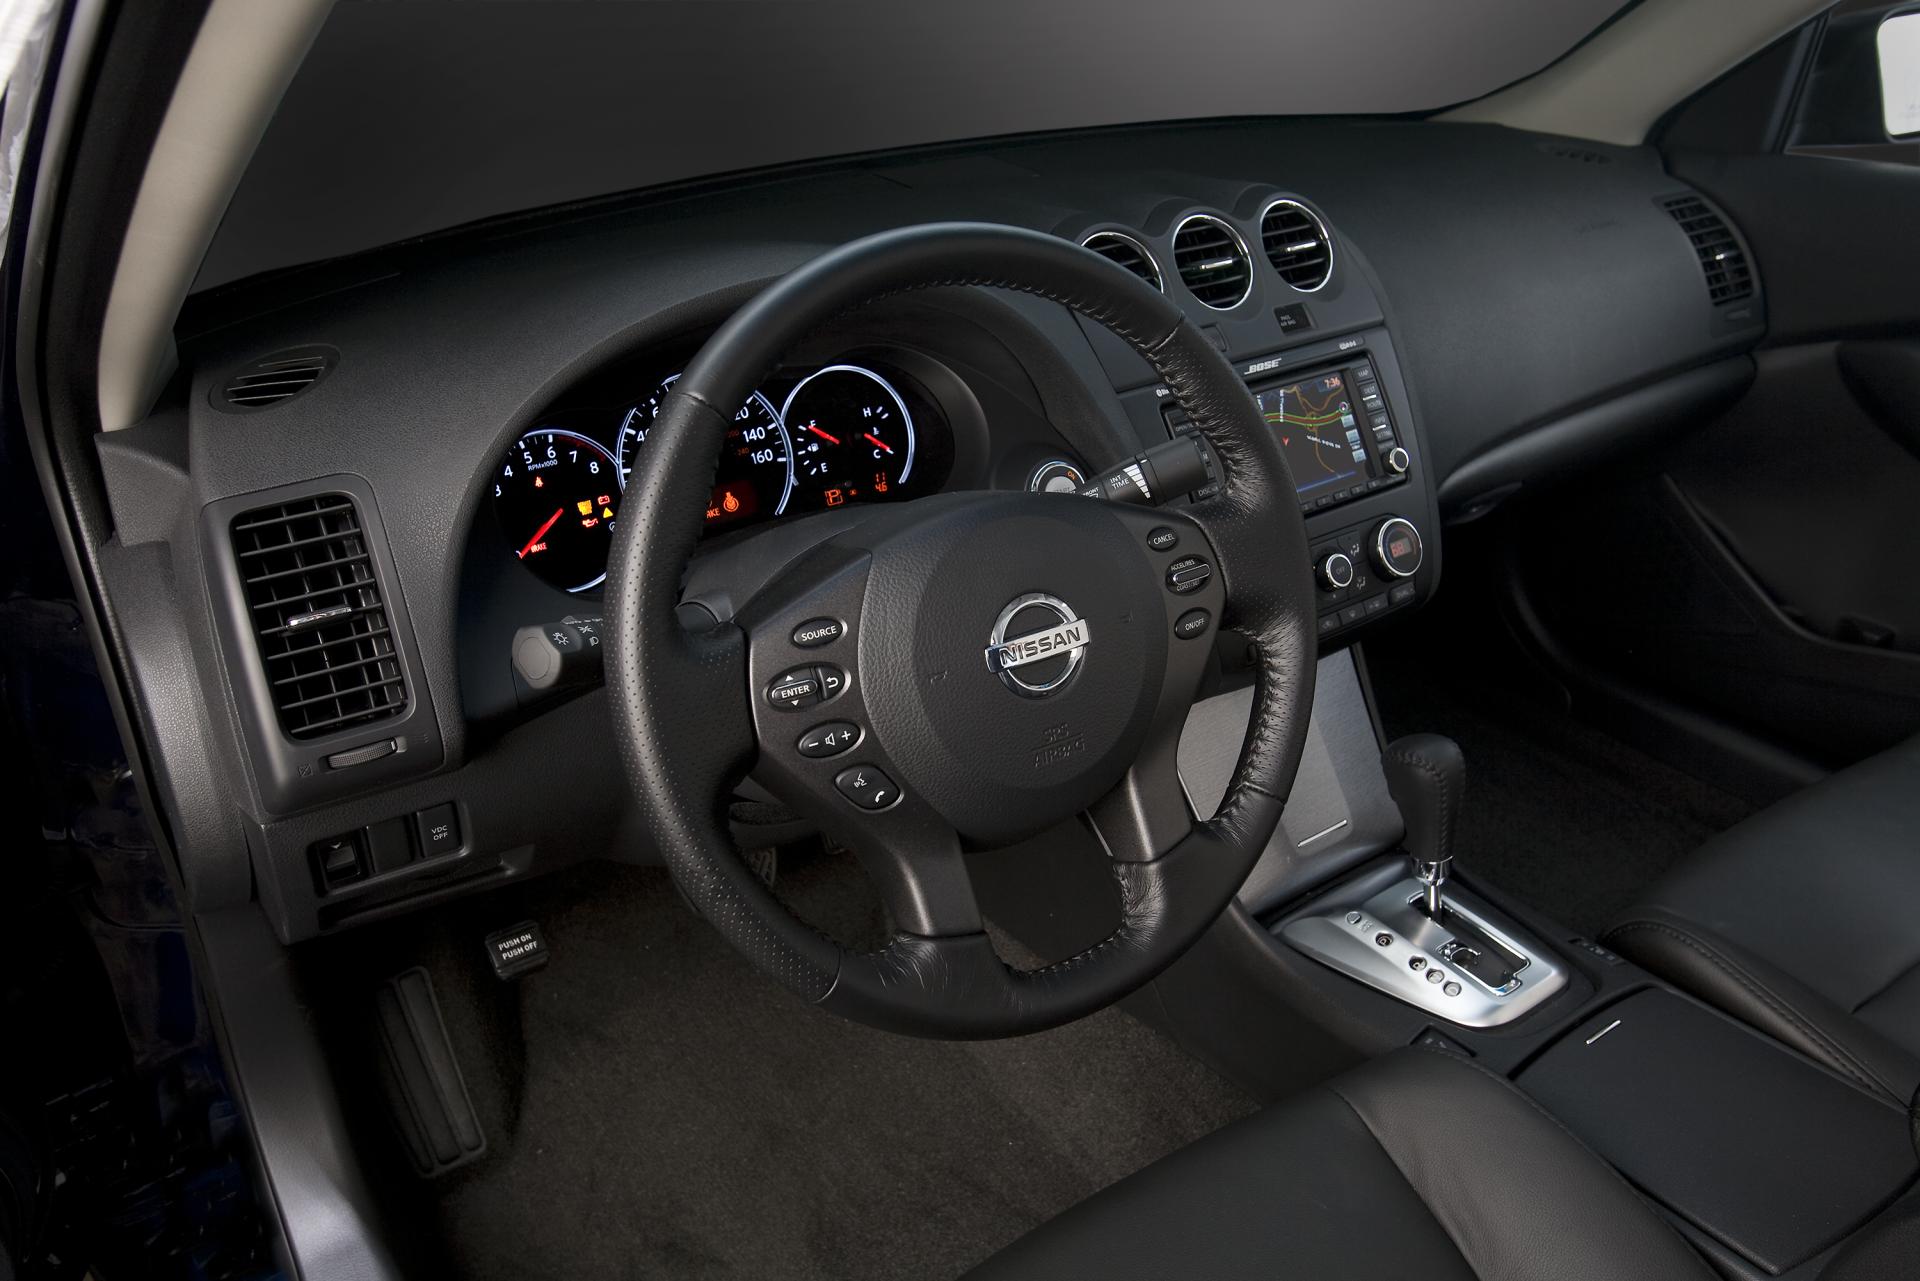 2014 Nissan Altima